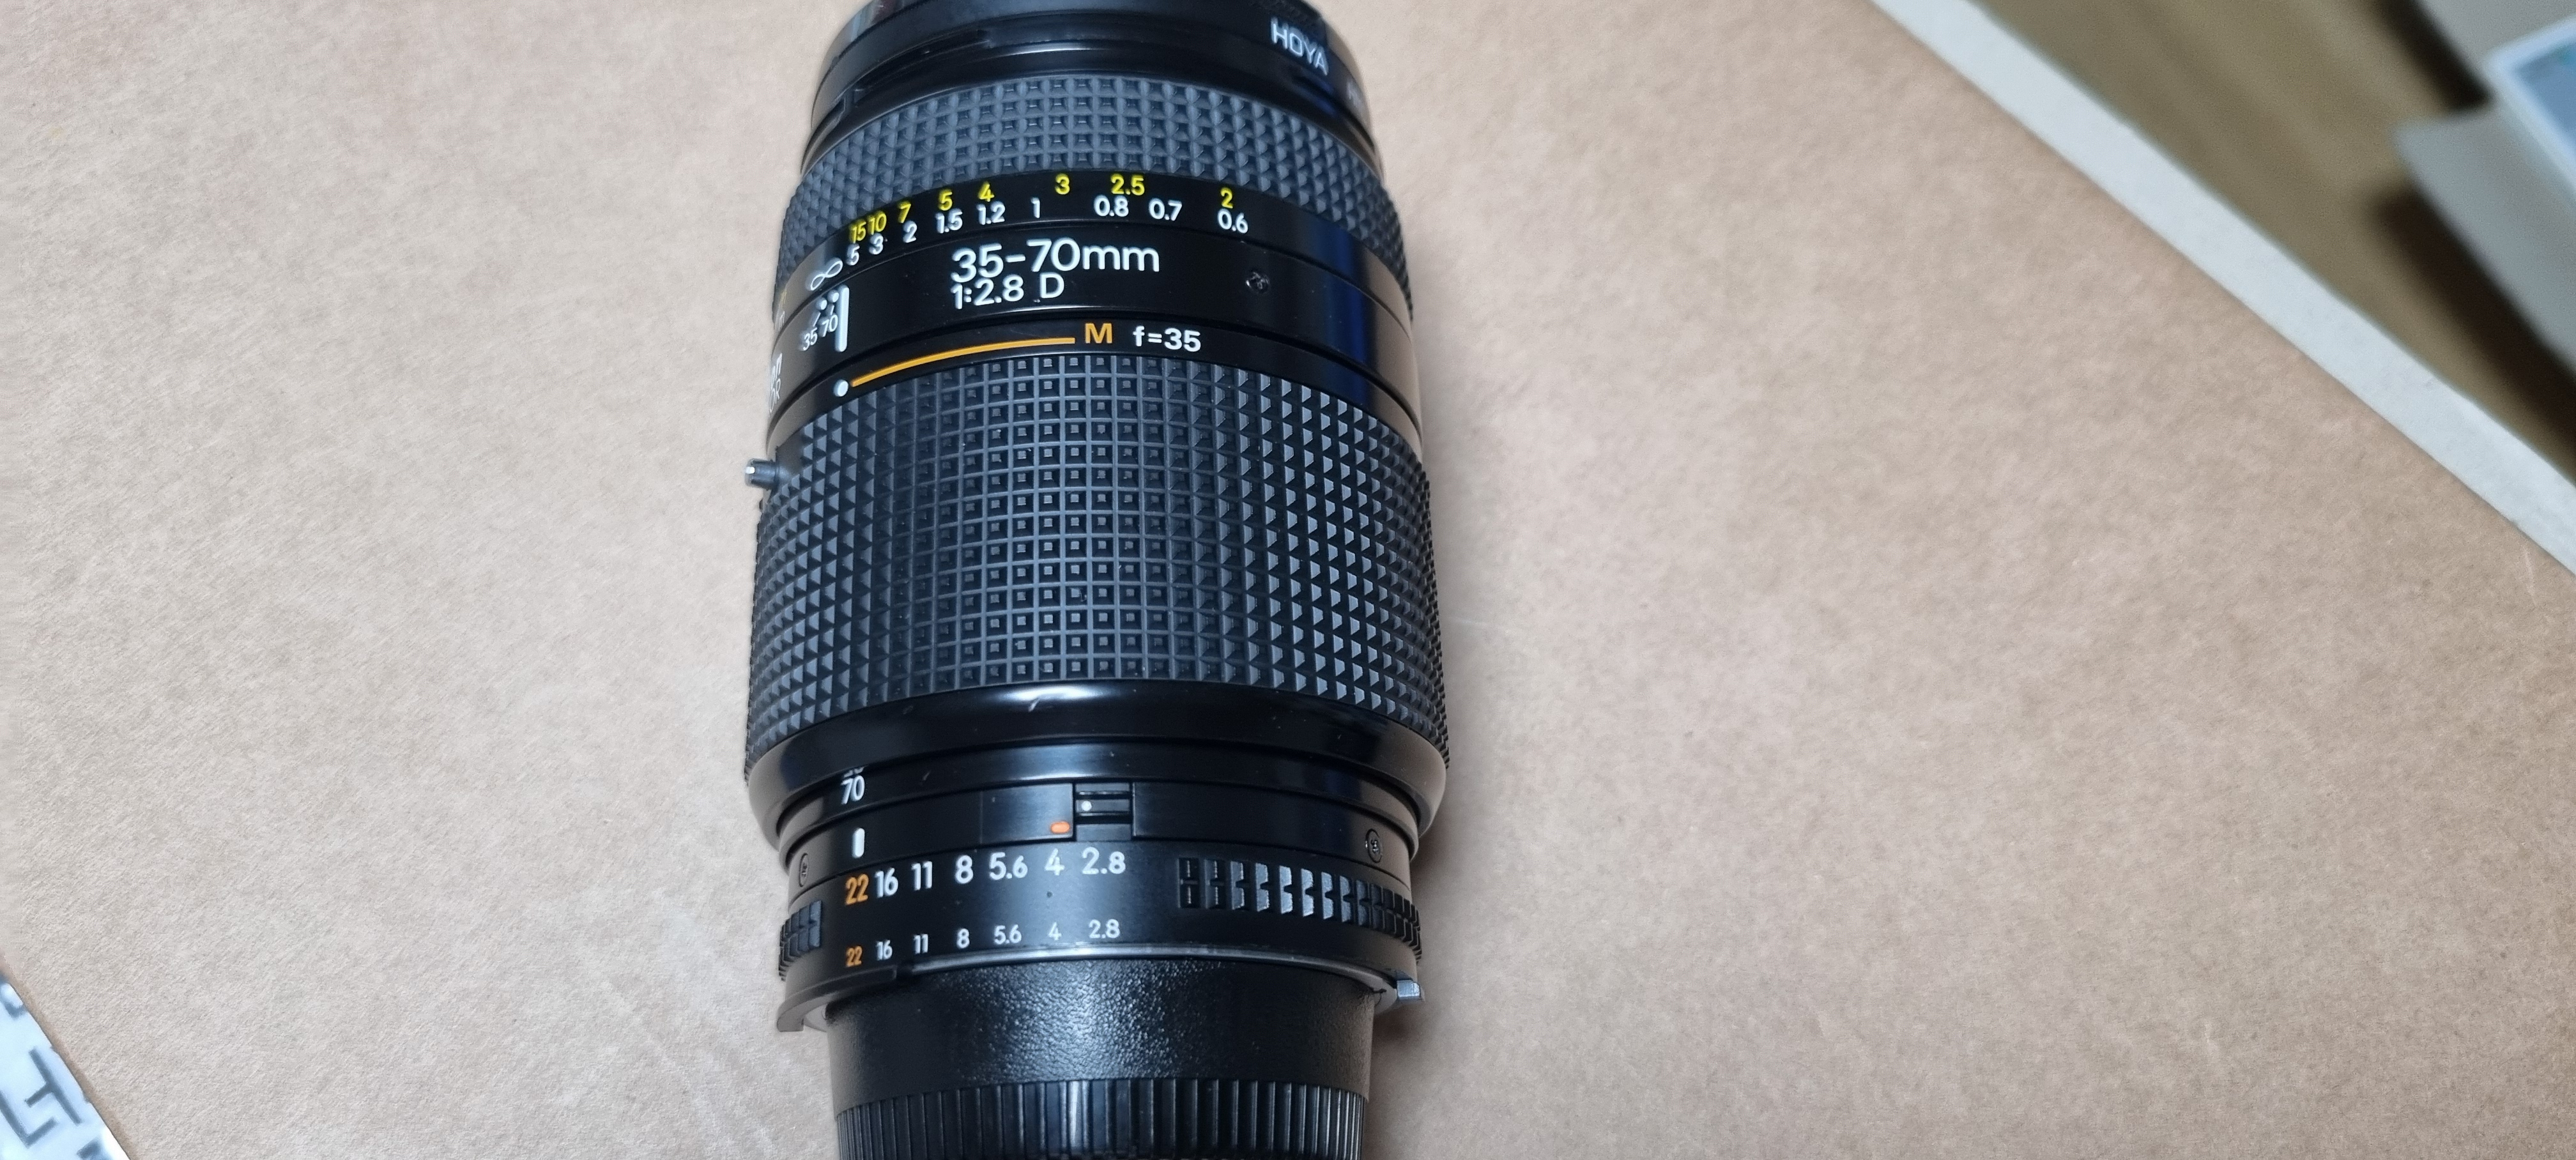 니콘 AF 35-70mm f/2.8D 줌 렌즈